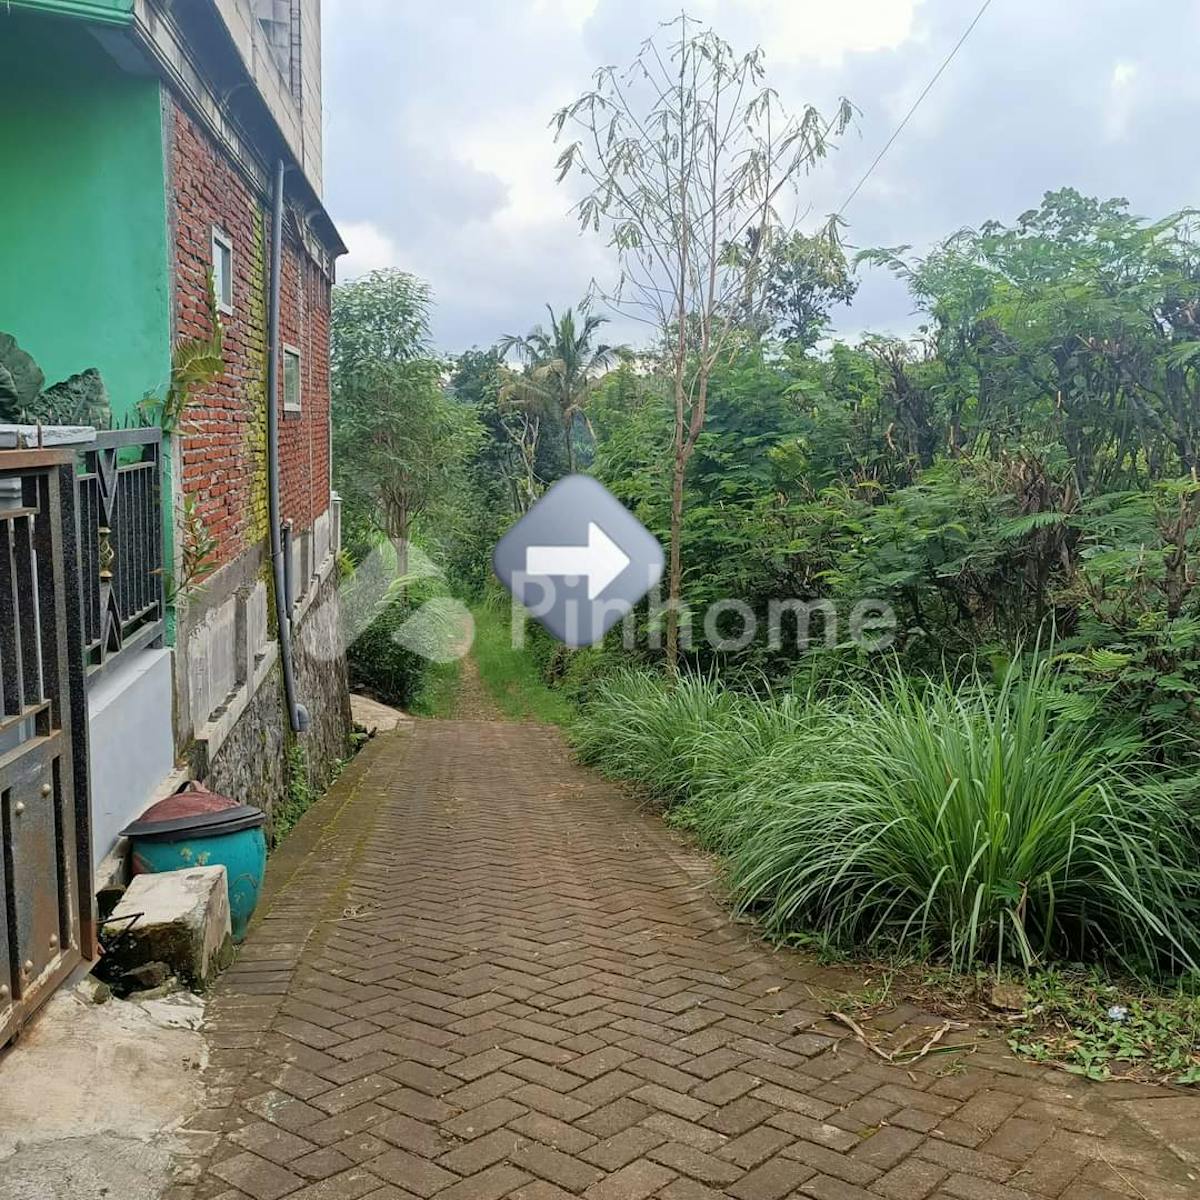 Dijual Tanah Komersial Lokasi Bagus di Jl. Locari, Precet, Sumbersekar, Kec. Dau, Kabupaten Malang, Jawa Timur 65151 - Gambar 3